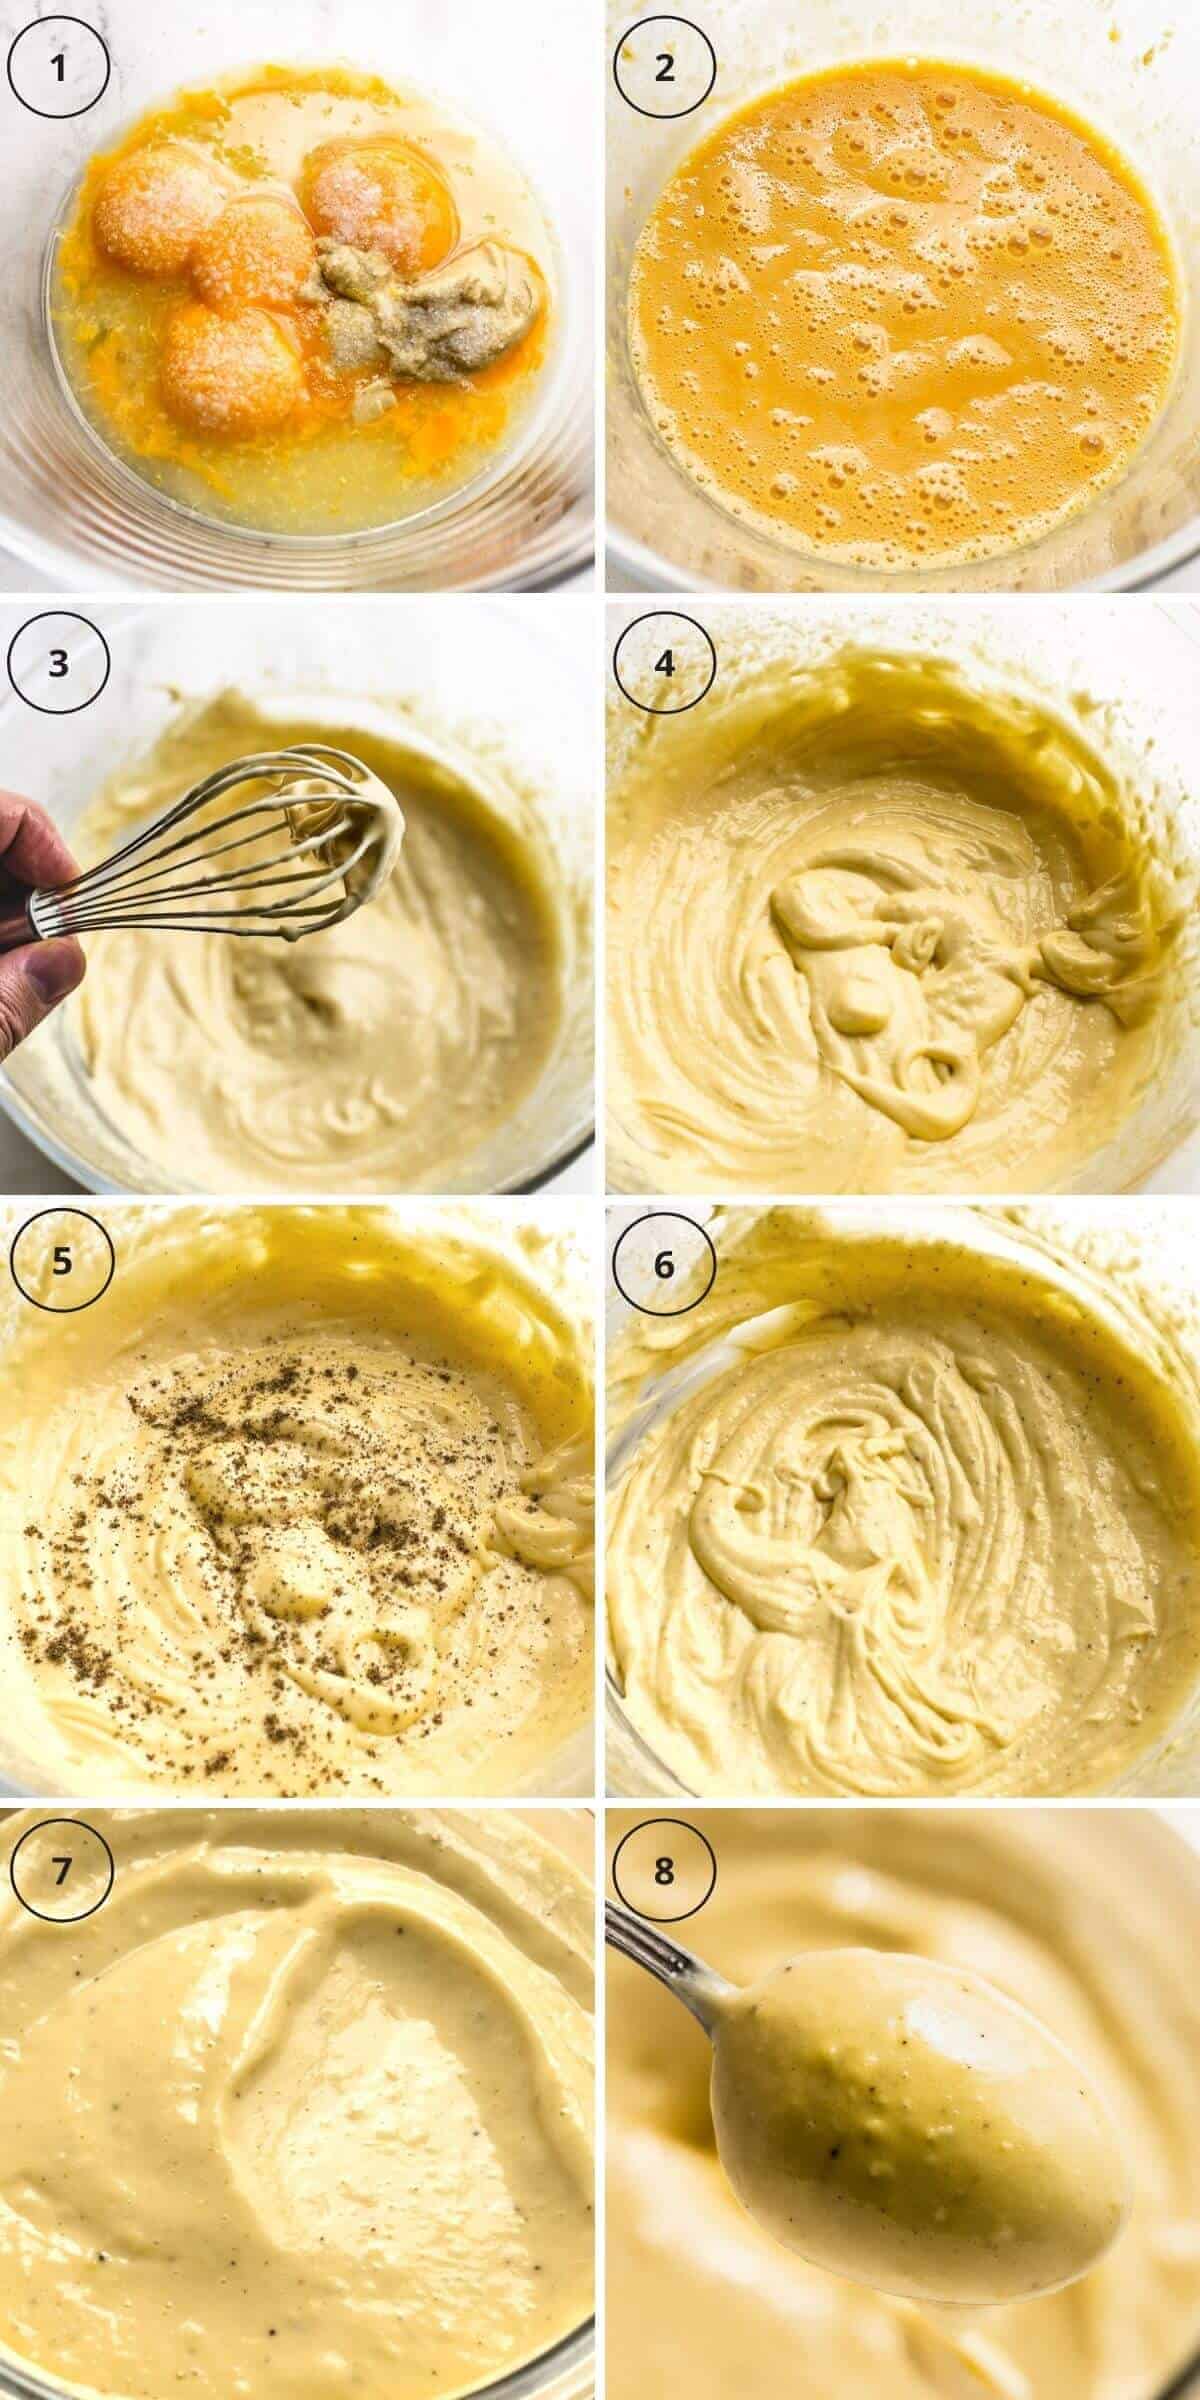 process of making mayonnaise